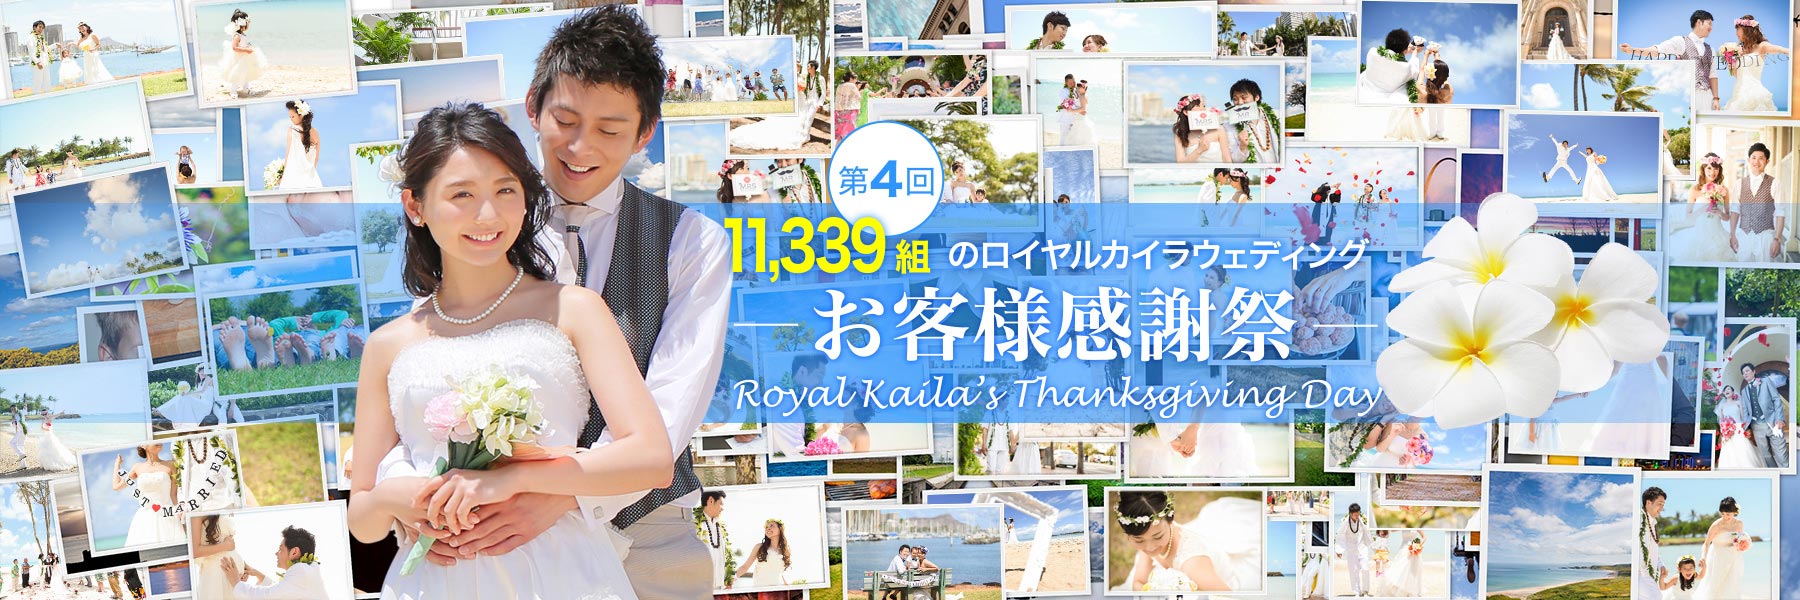 Royal Kaila’s Thanksgiving Day ～11,339組のロイヤルカイラお客様感謝祭～